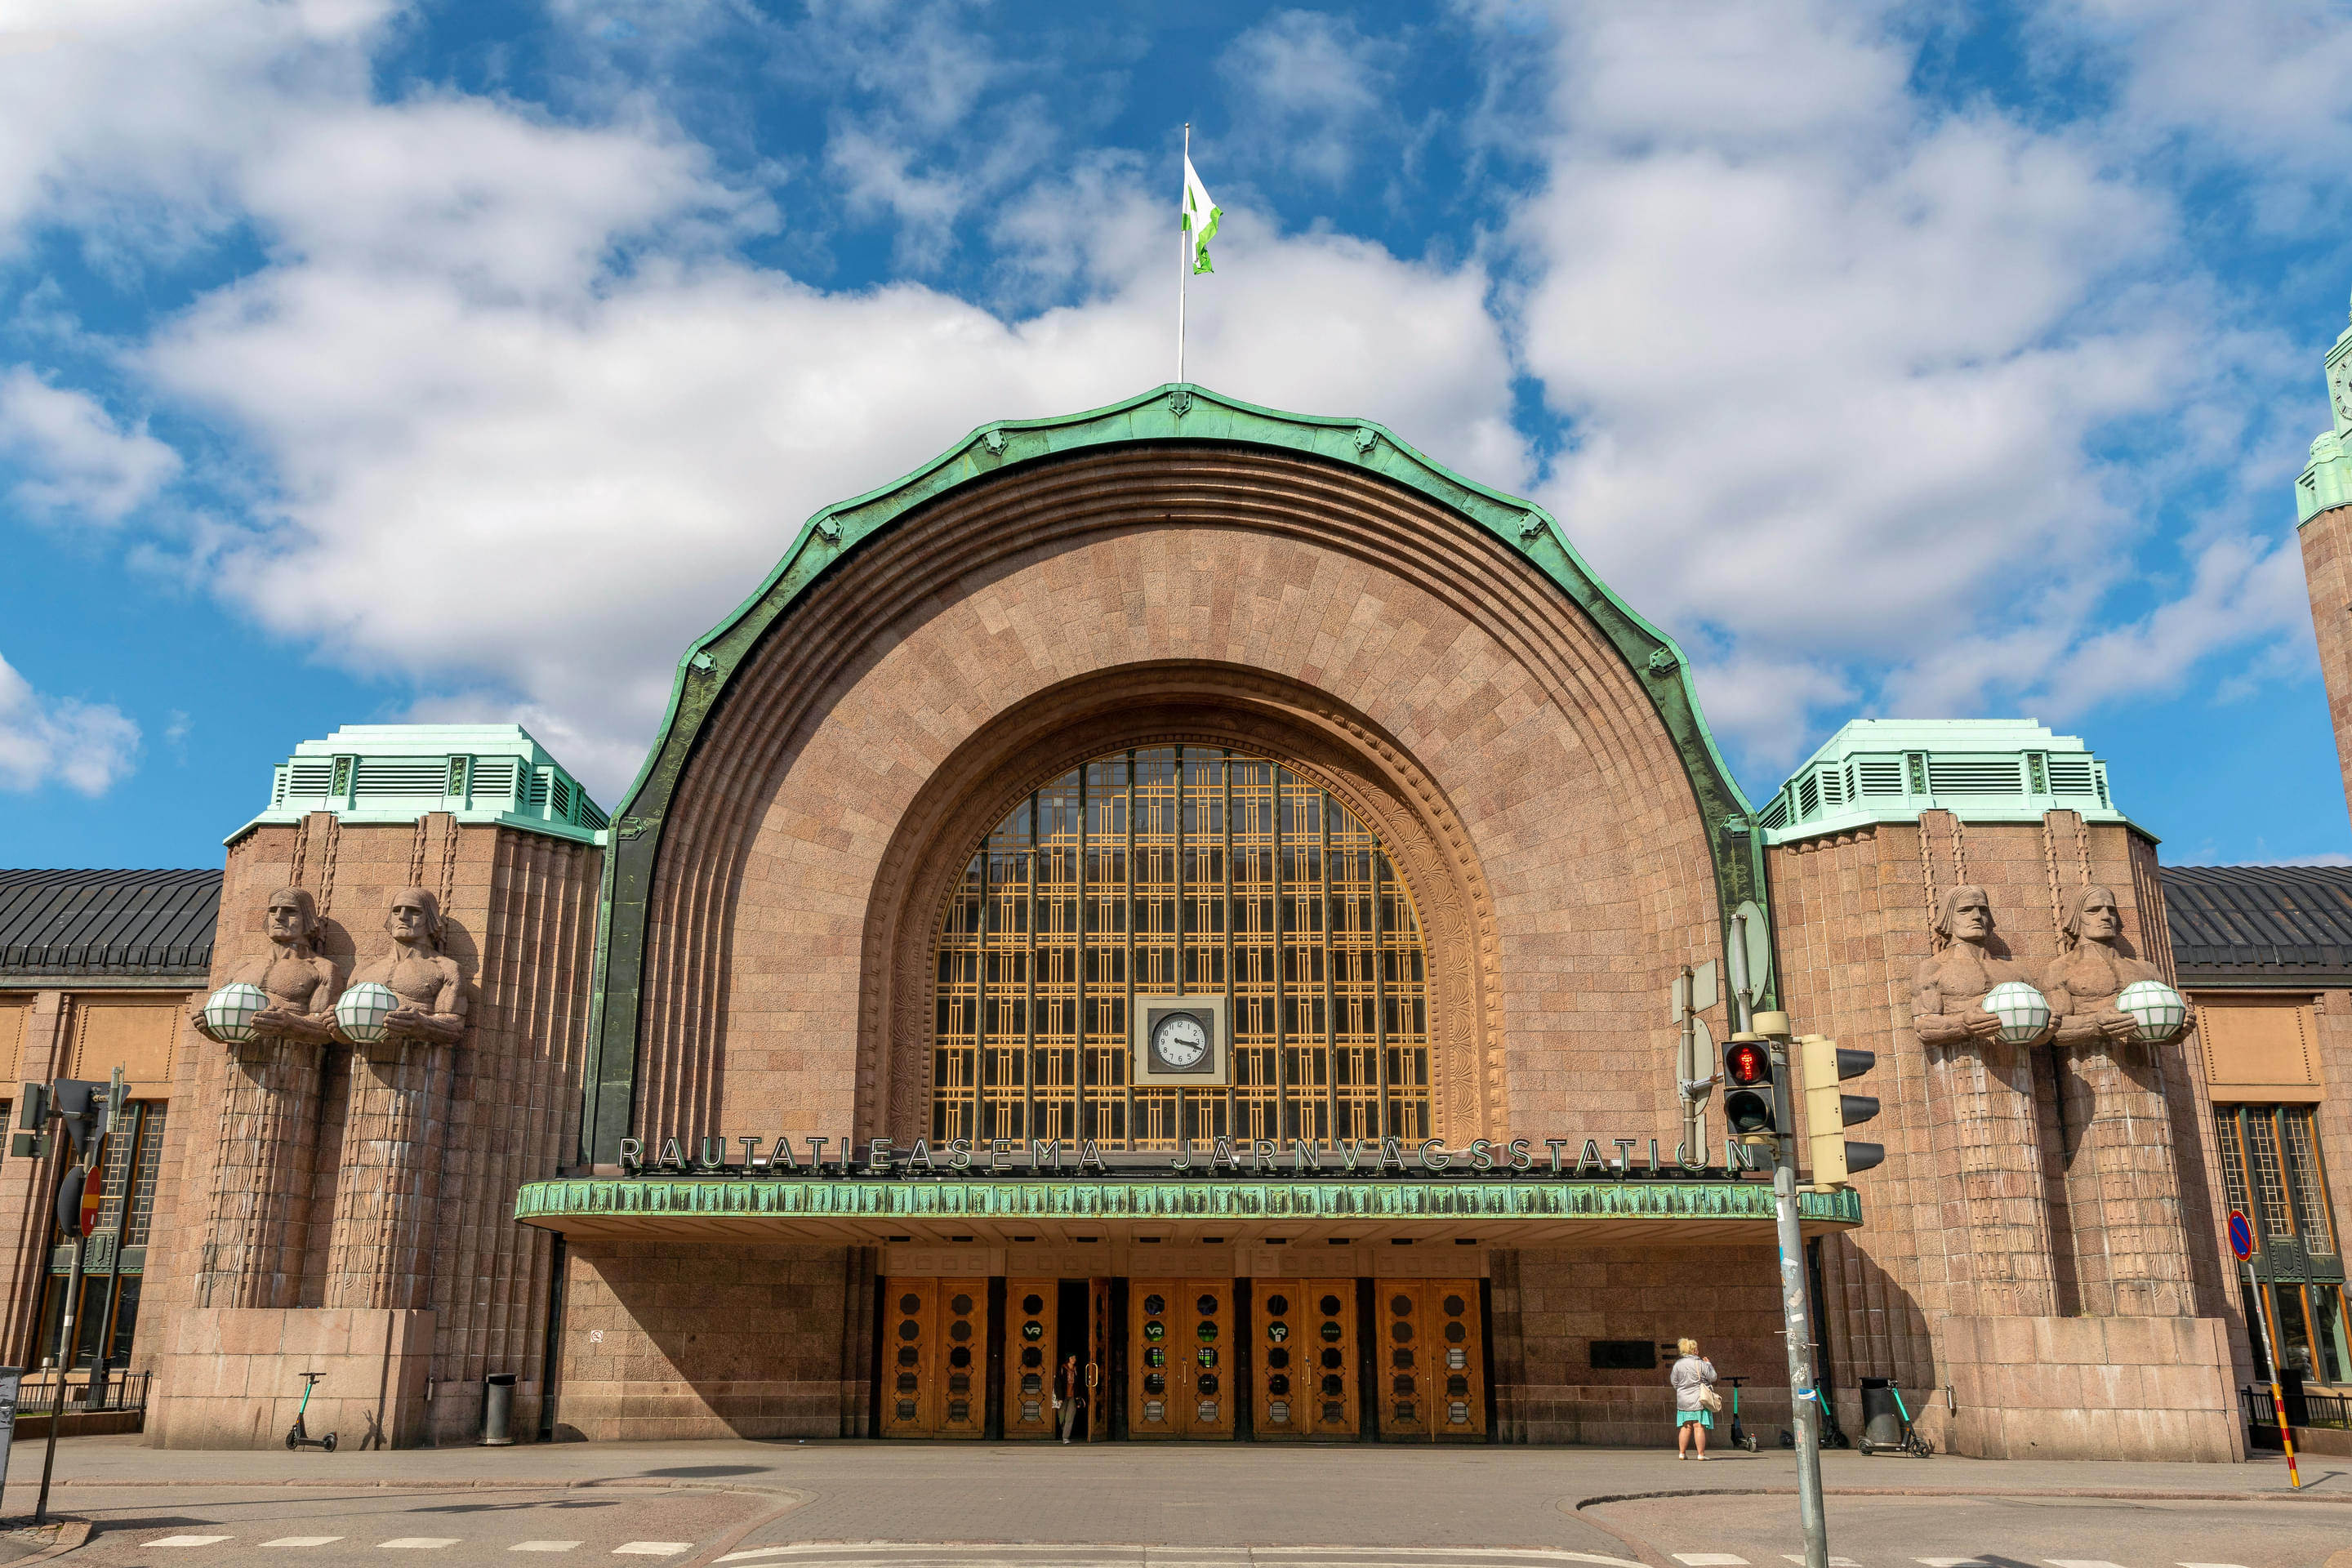 Helsinki Railway Station Overview